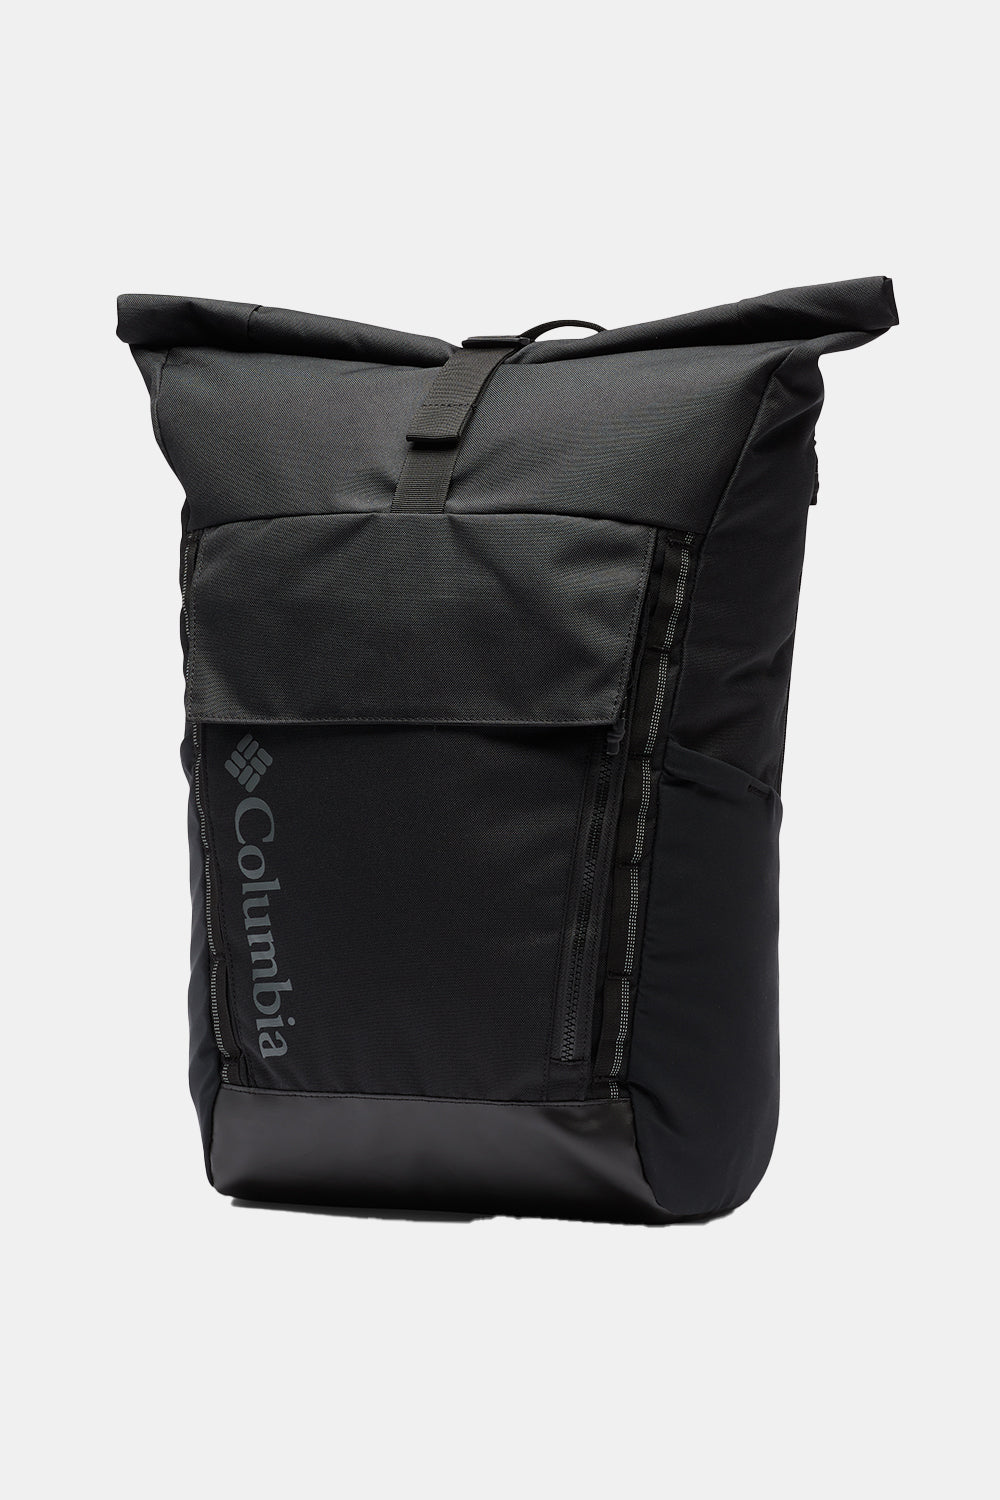 Columbia Convey II 27L Rolltop Backpack (Black)